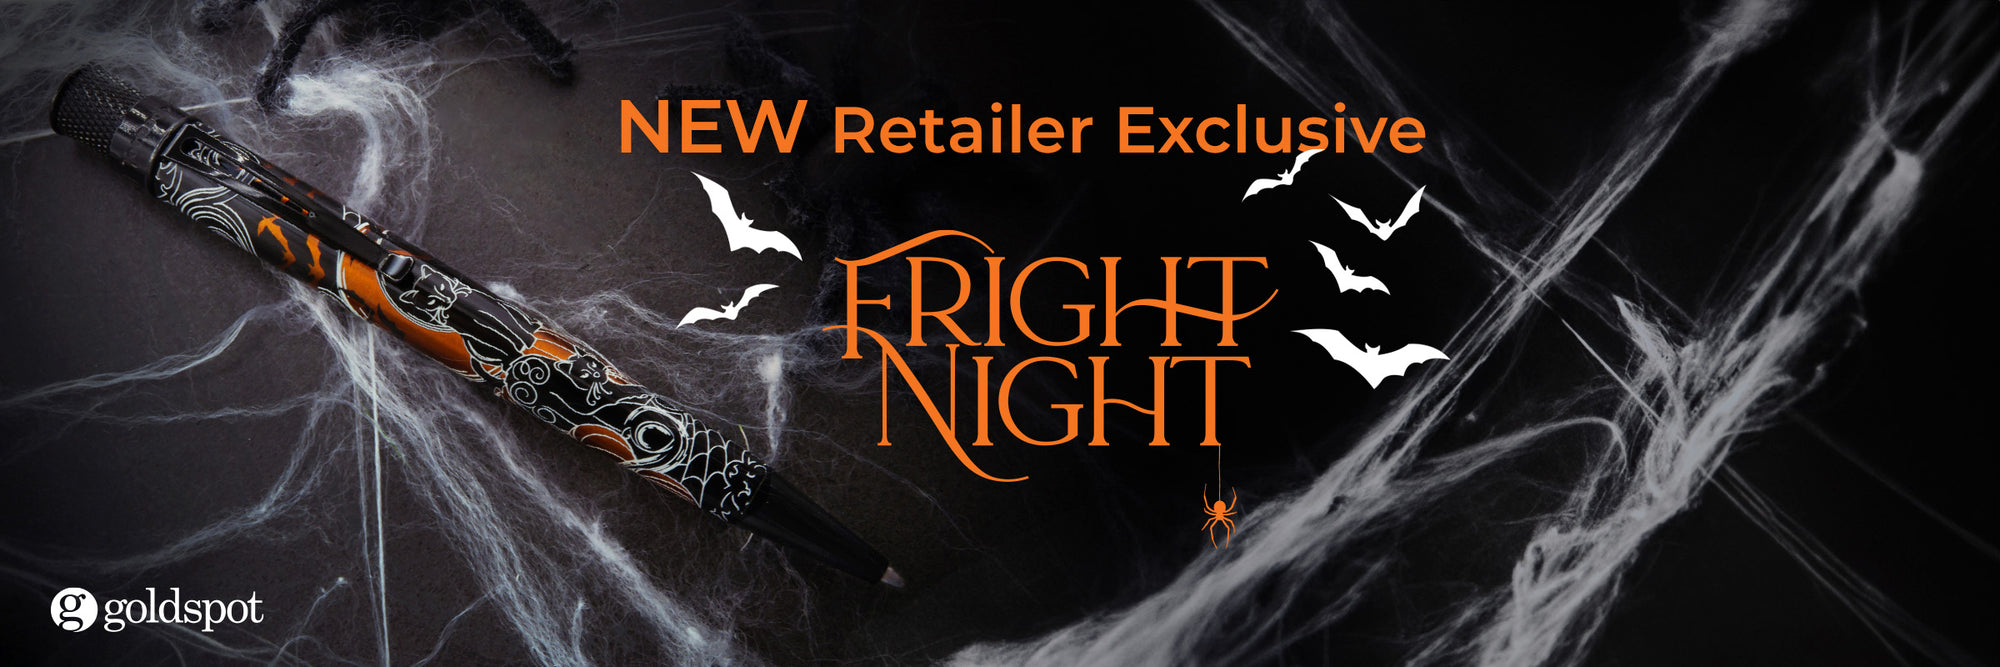 New Retailer Exclusive - Fright Night Goldspot